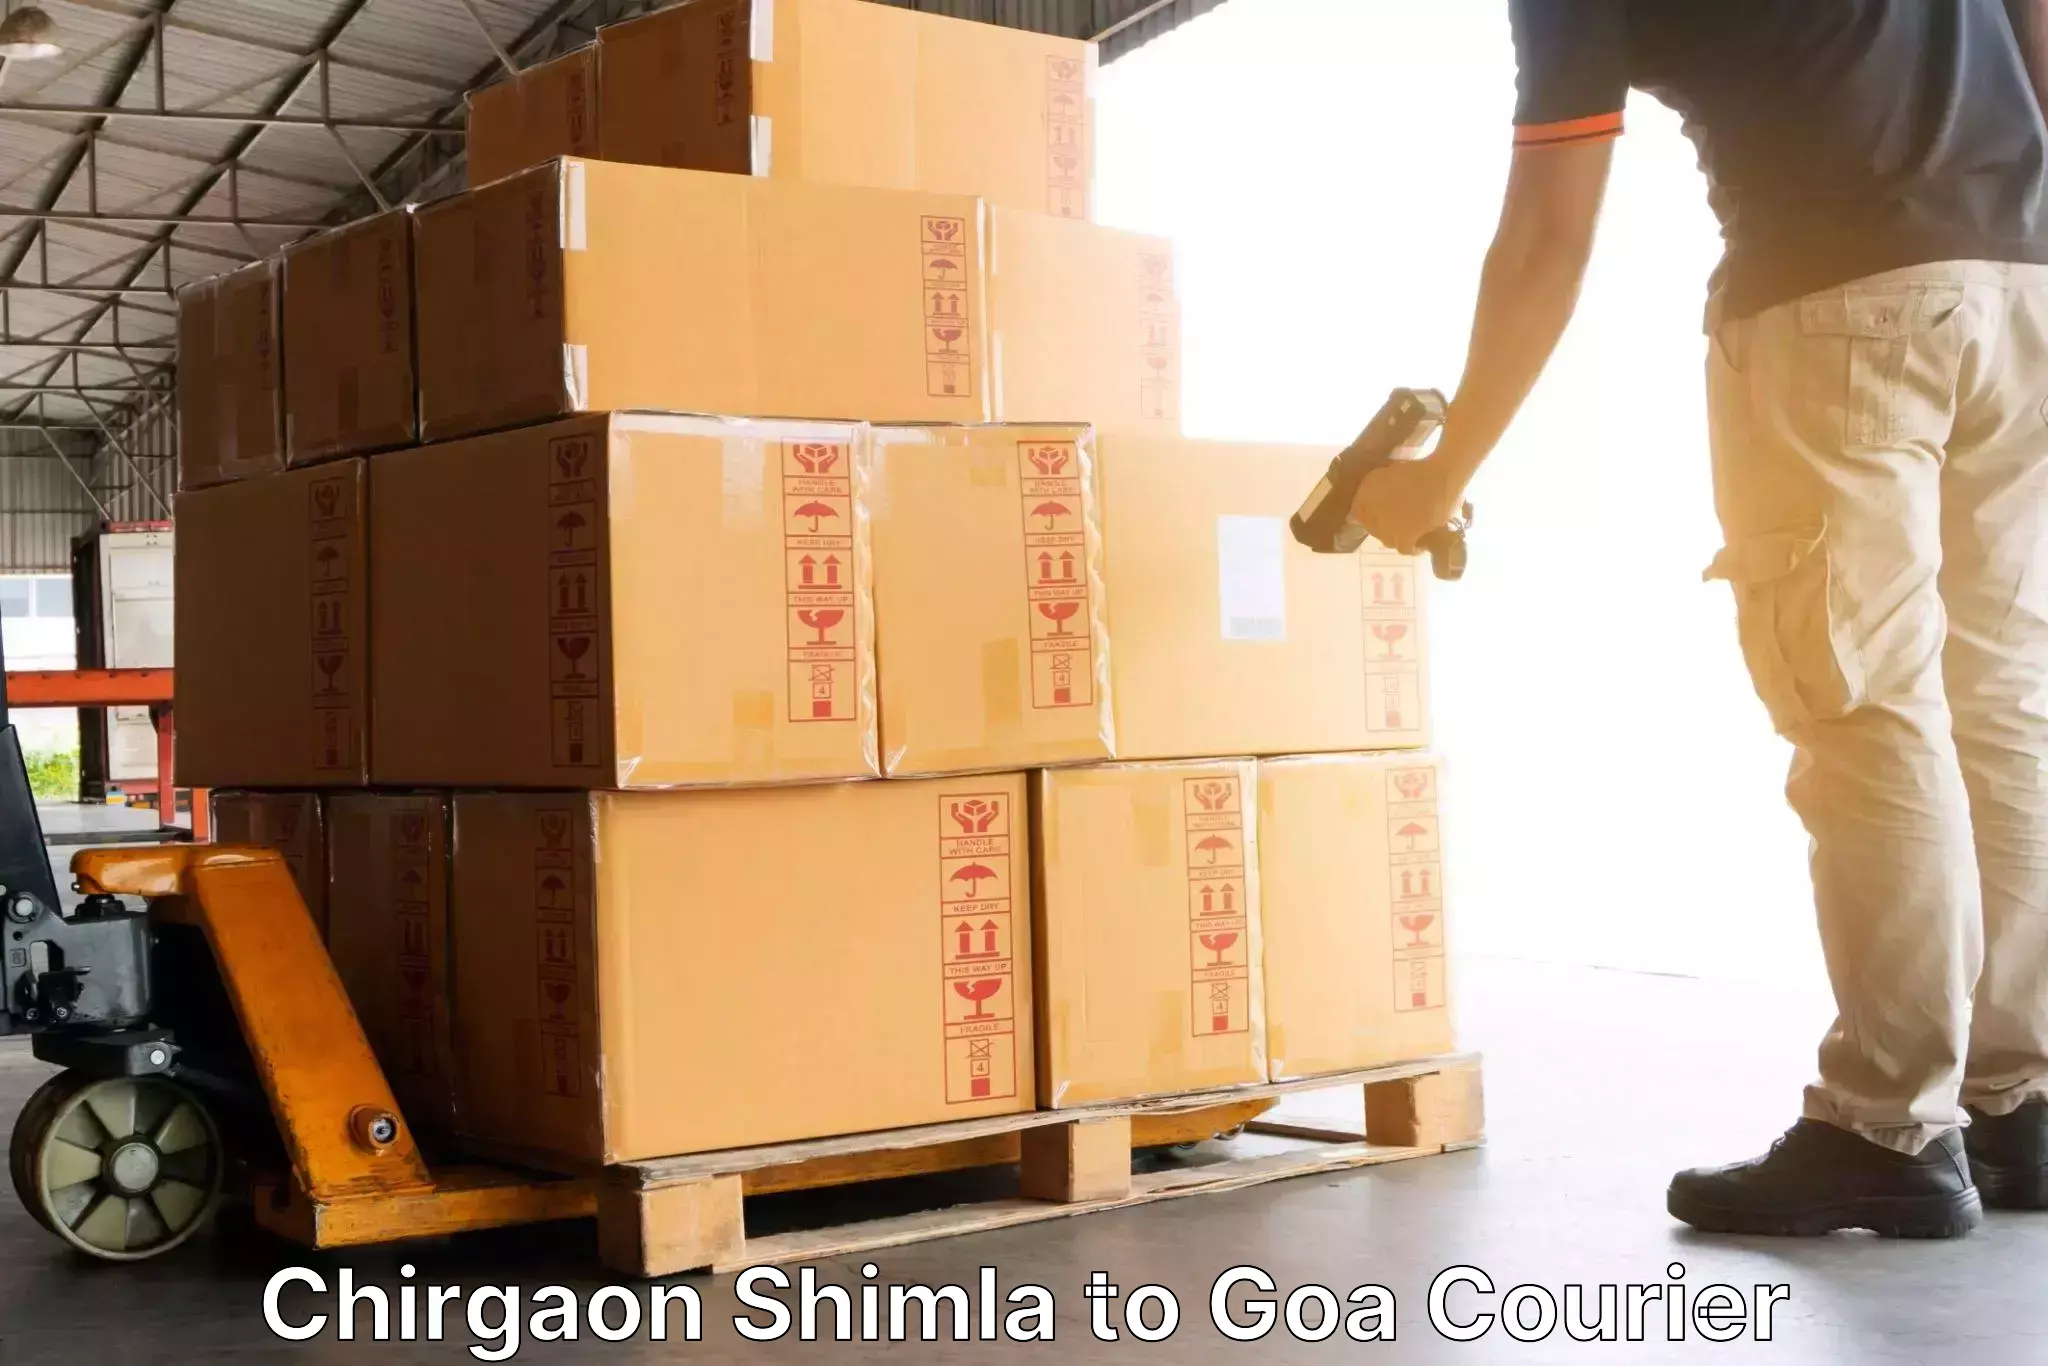 Express delivery network Chirgaon Shimla to Ponda